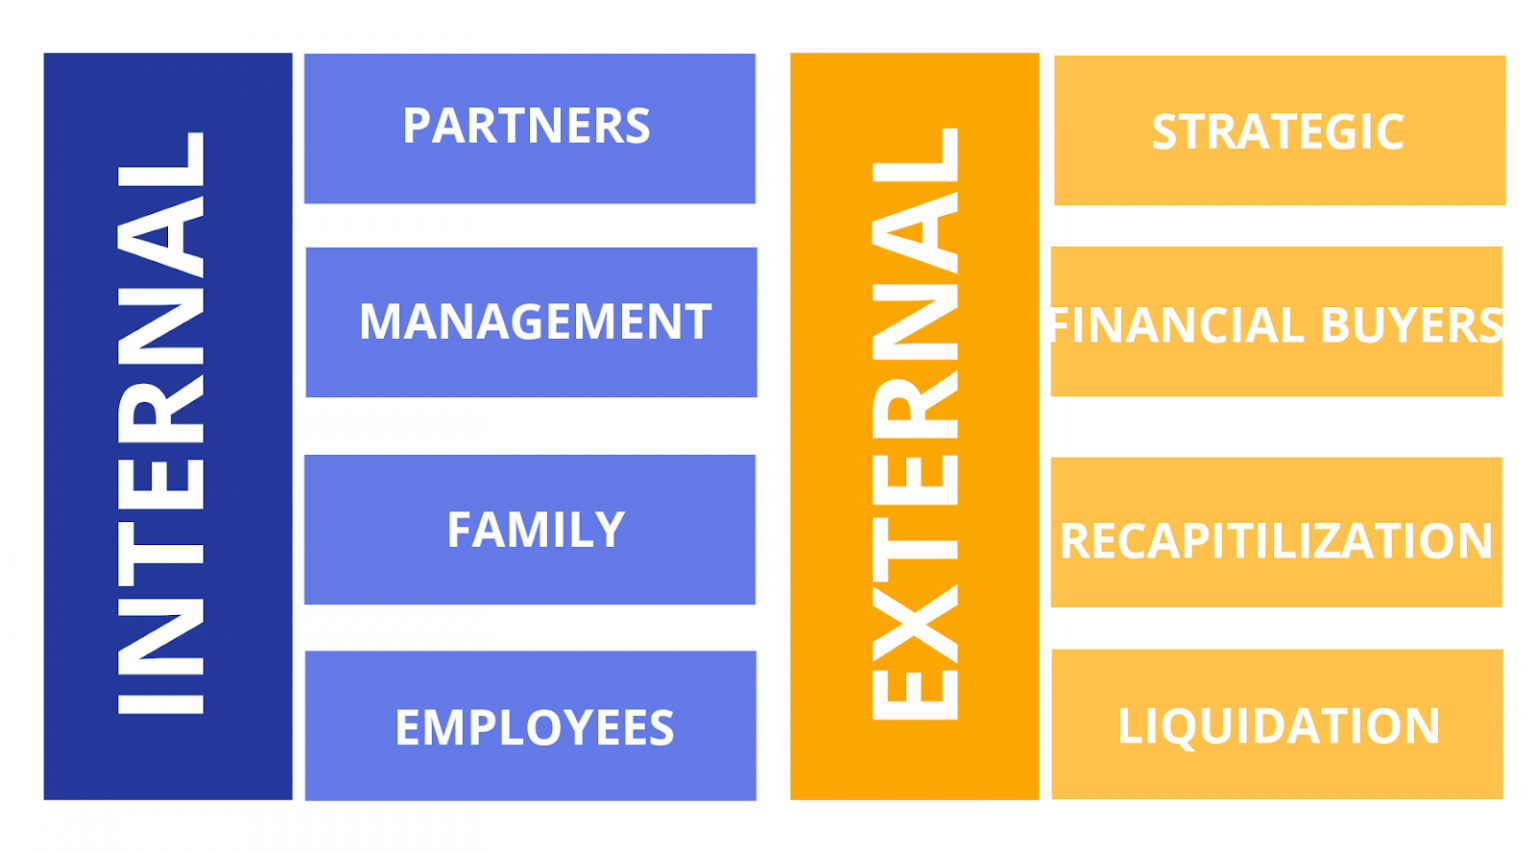 venture capital exit strategy business plan